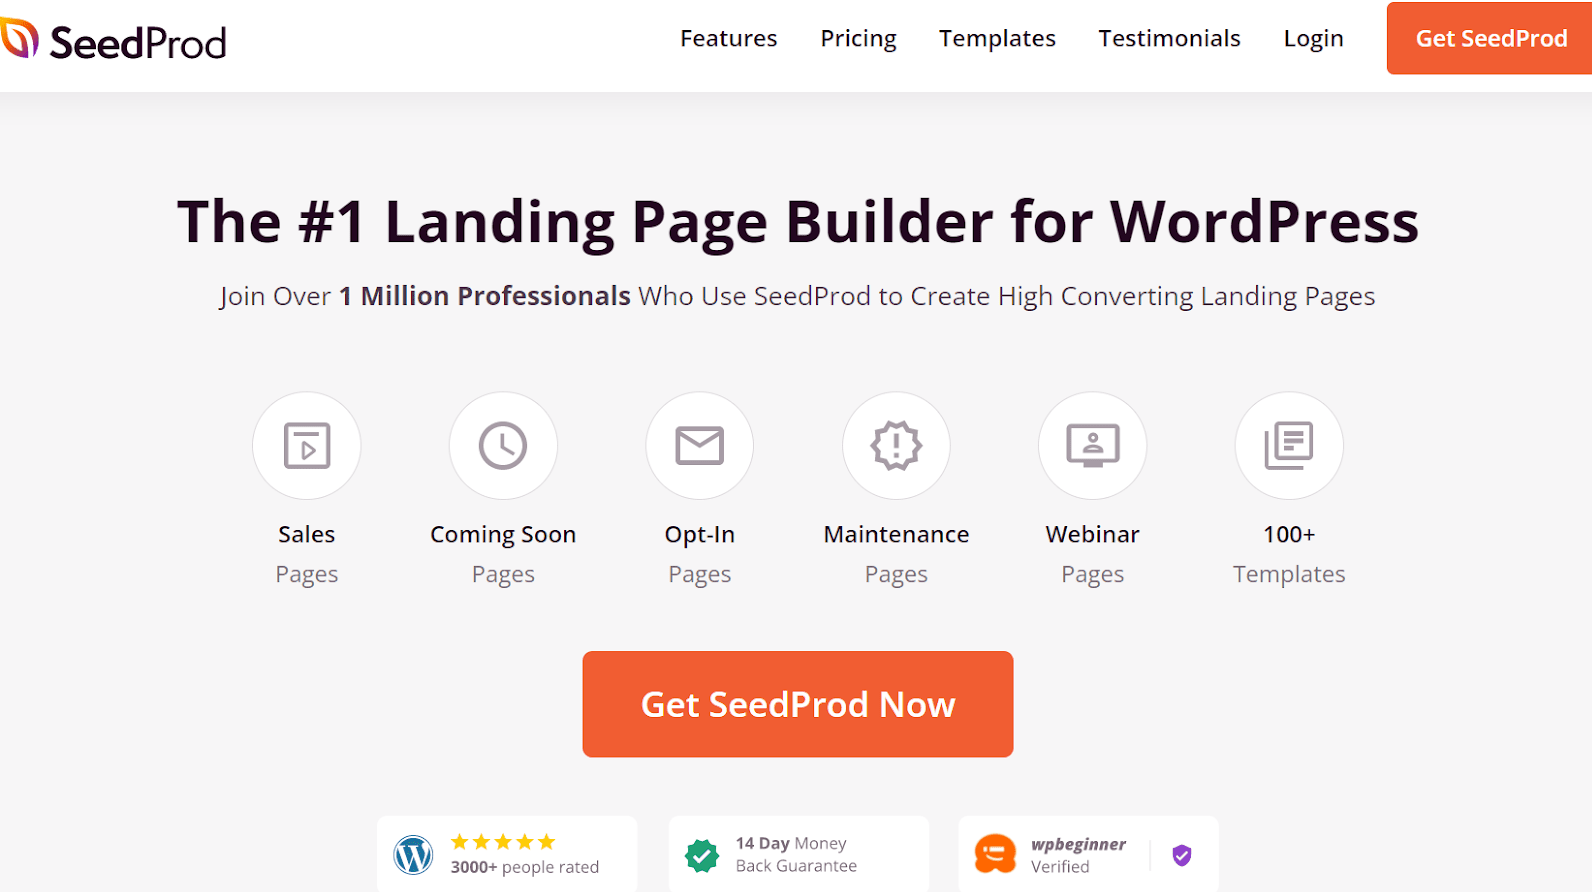 SeedProd Homepage